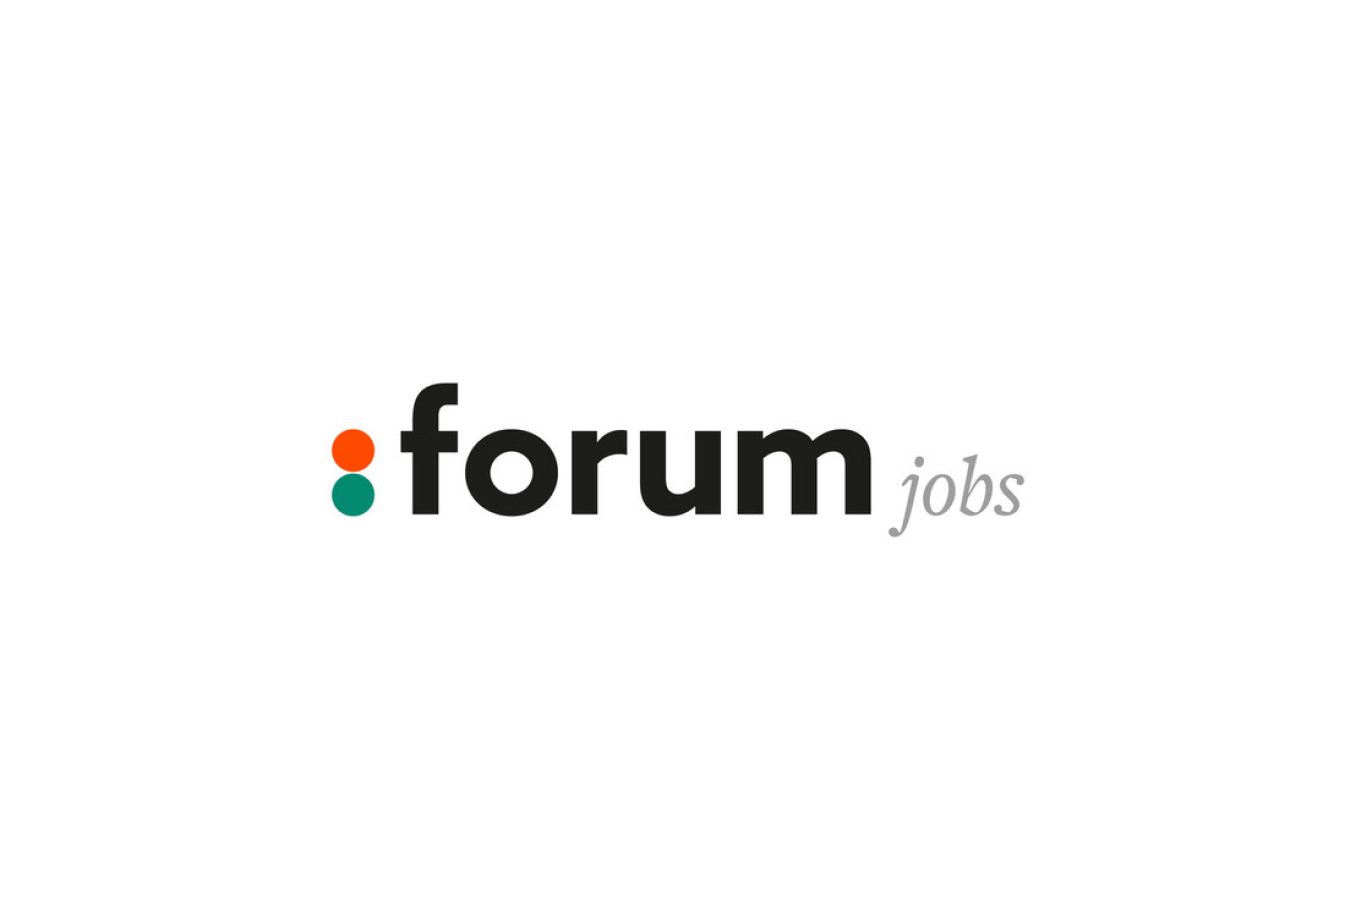 Forumjobs logo RGB v1 750x650px